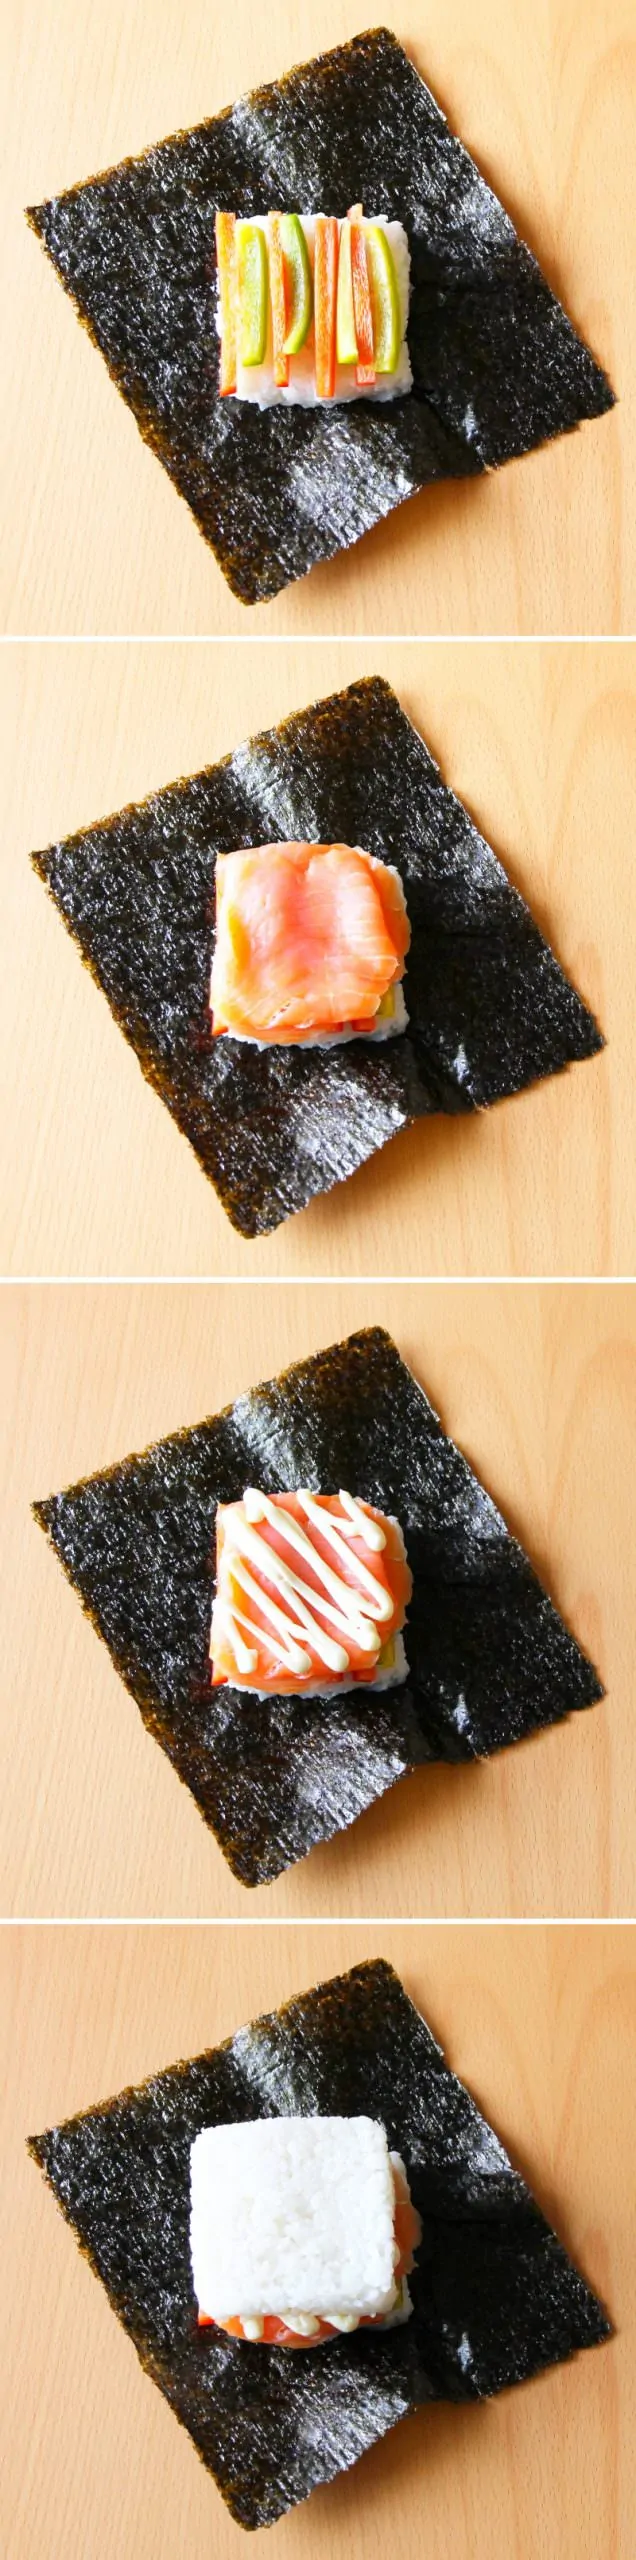 Onigirazu Sushi Sandwich Schritt 4 Füllung platzieren